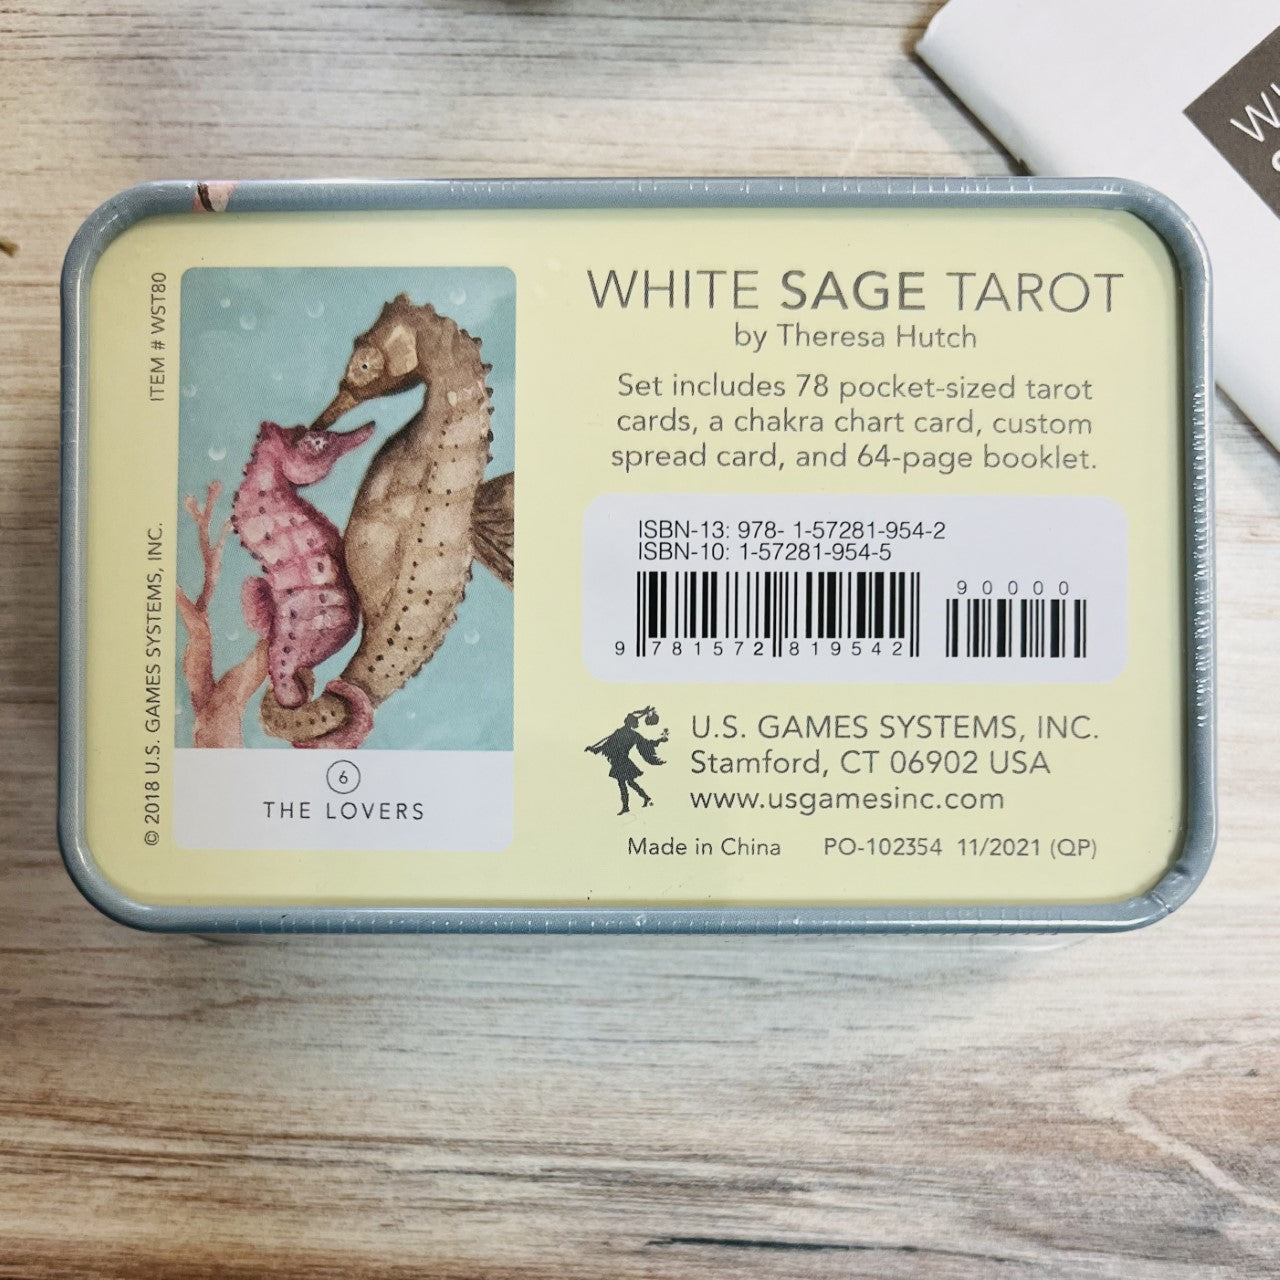 White Sage Tarot by Theresa Hutch